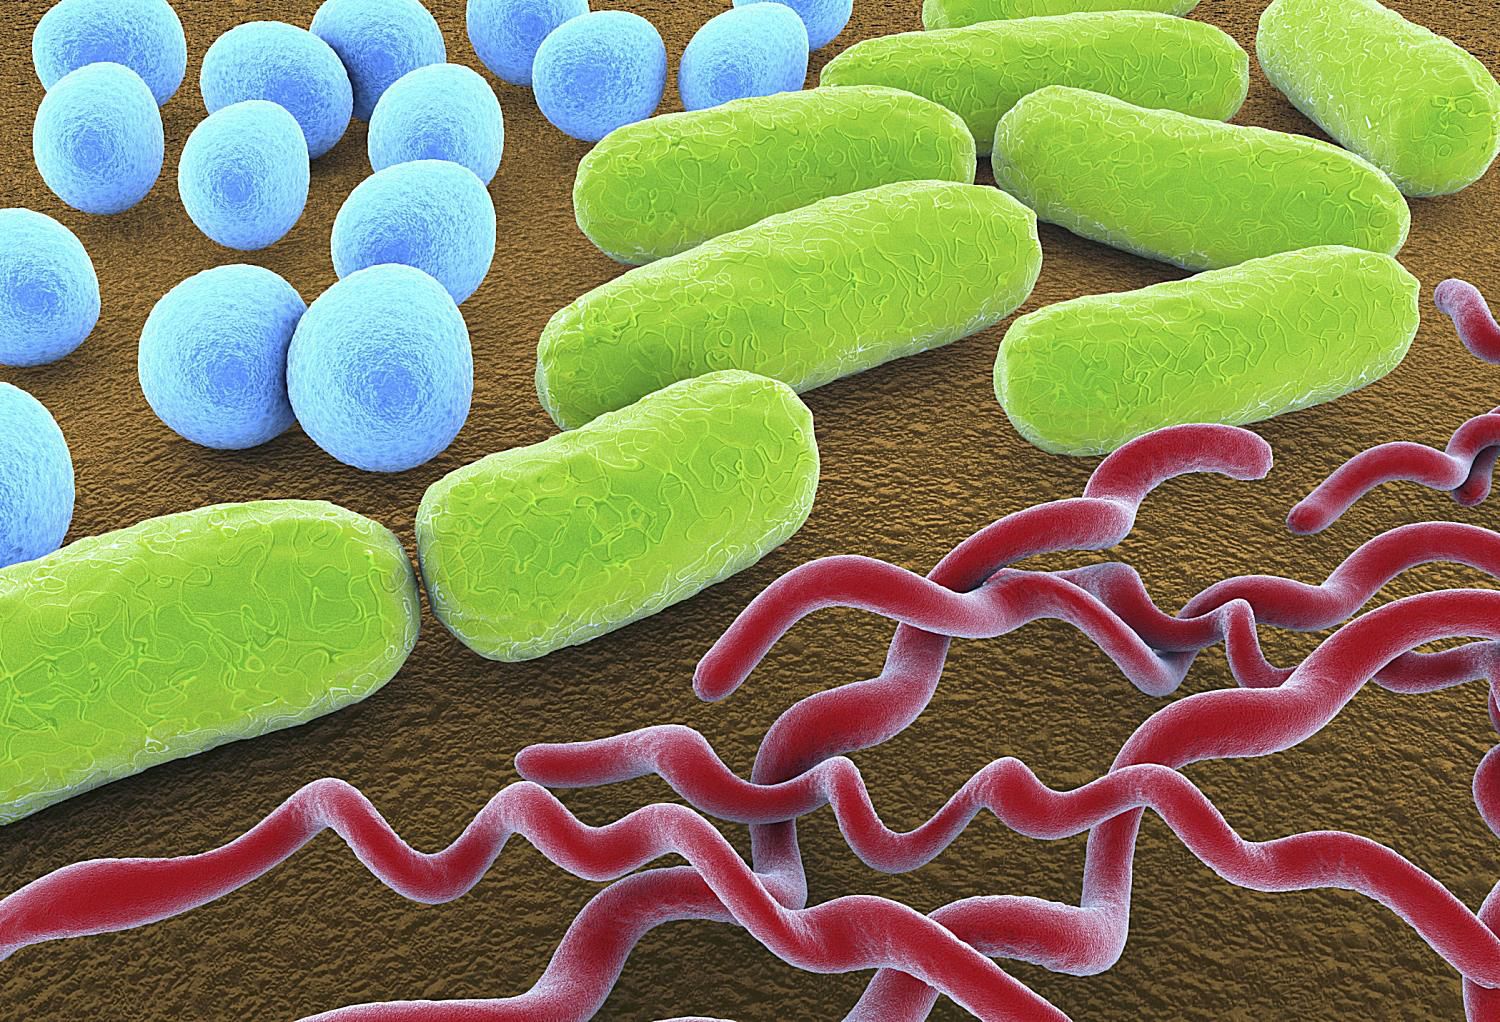 Bacteria Shapes